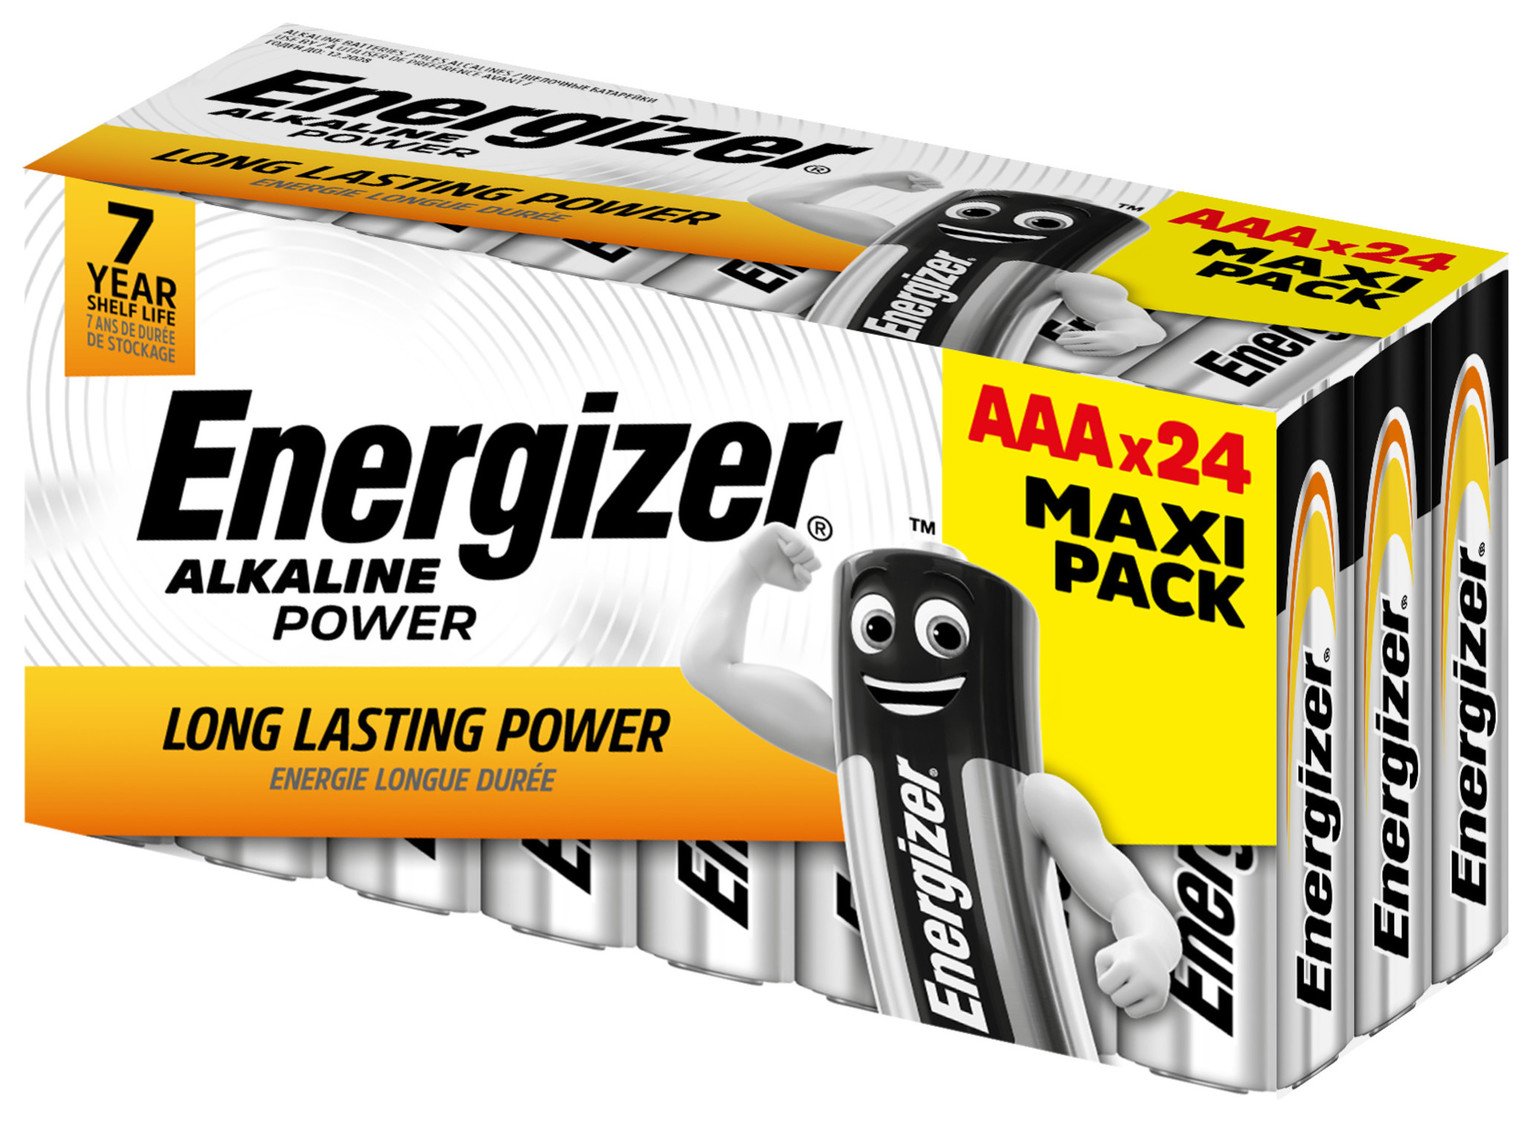 Energizer Alkaline Power AAA Batteries - Pack of 24